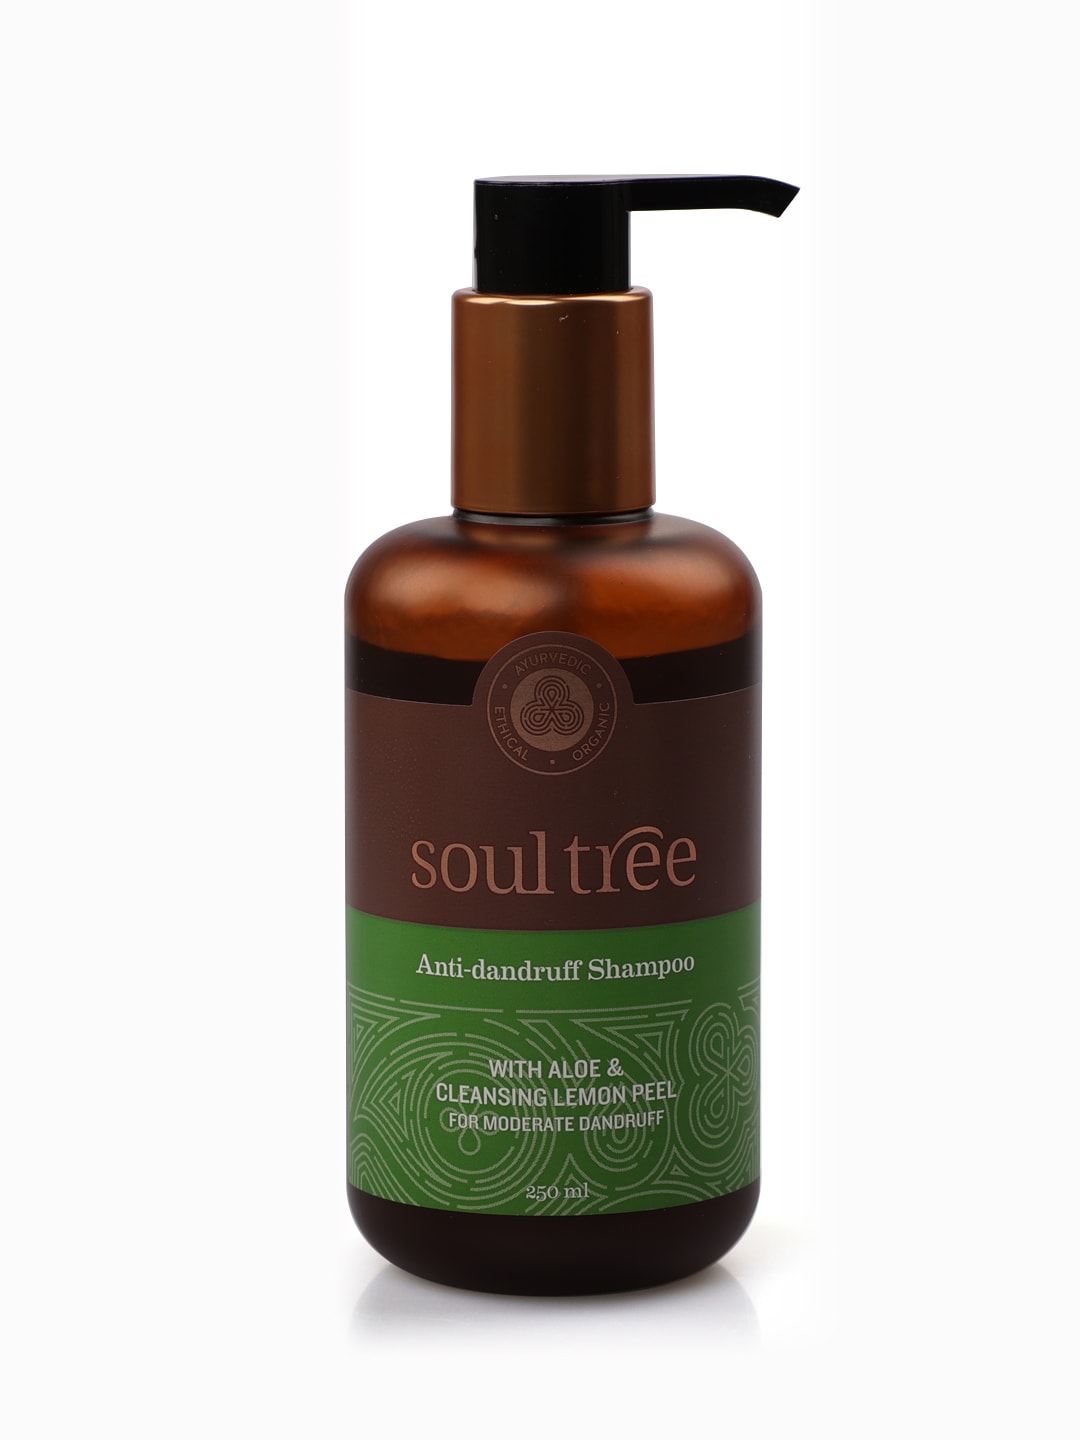 Soultree Anti-Dandruff Shampoo with Aloe & Cleansing Lemon Peel - 250ml Price in India